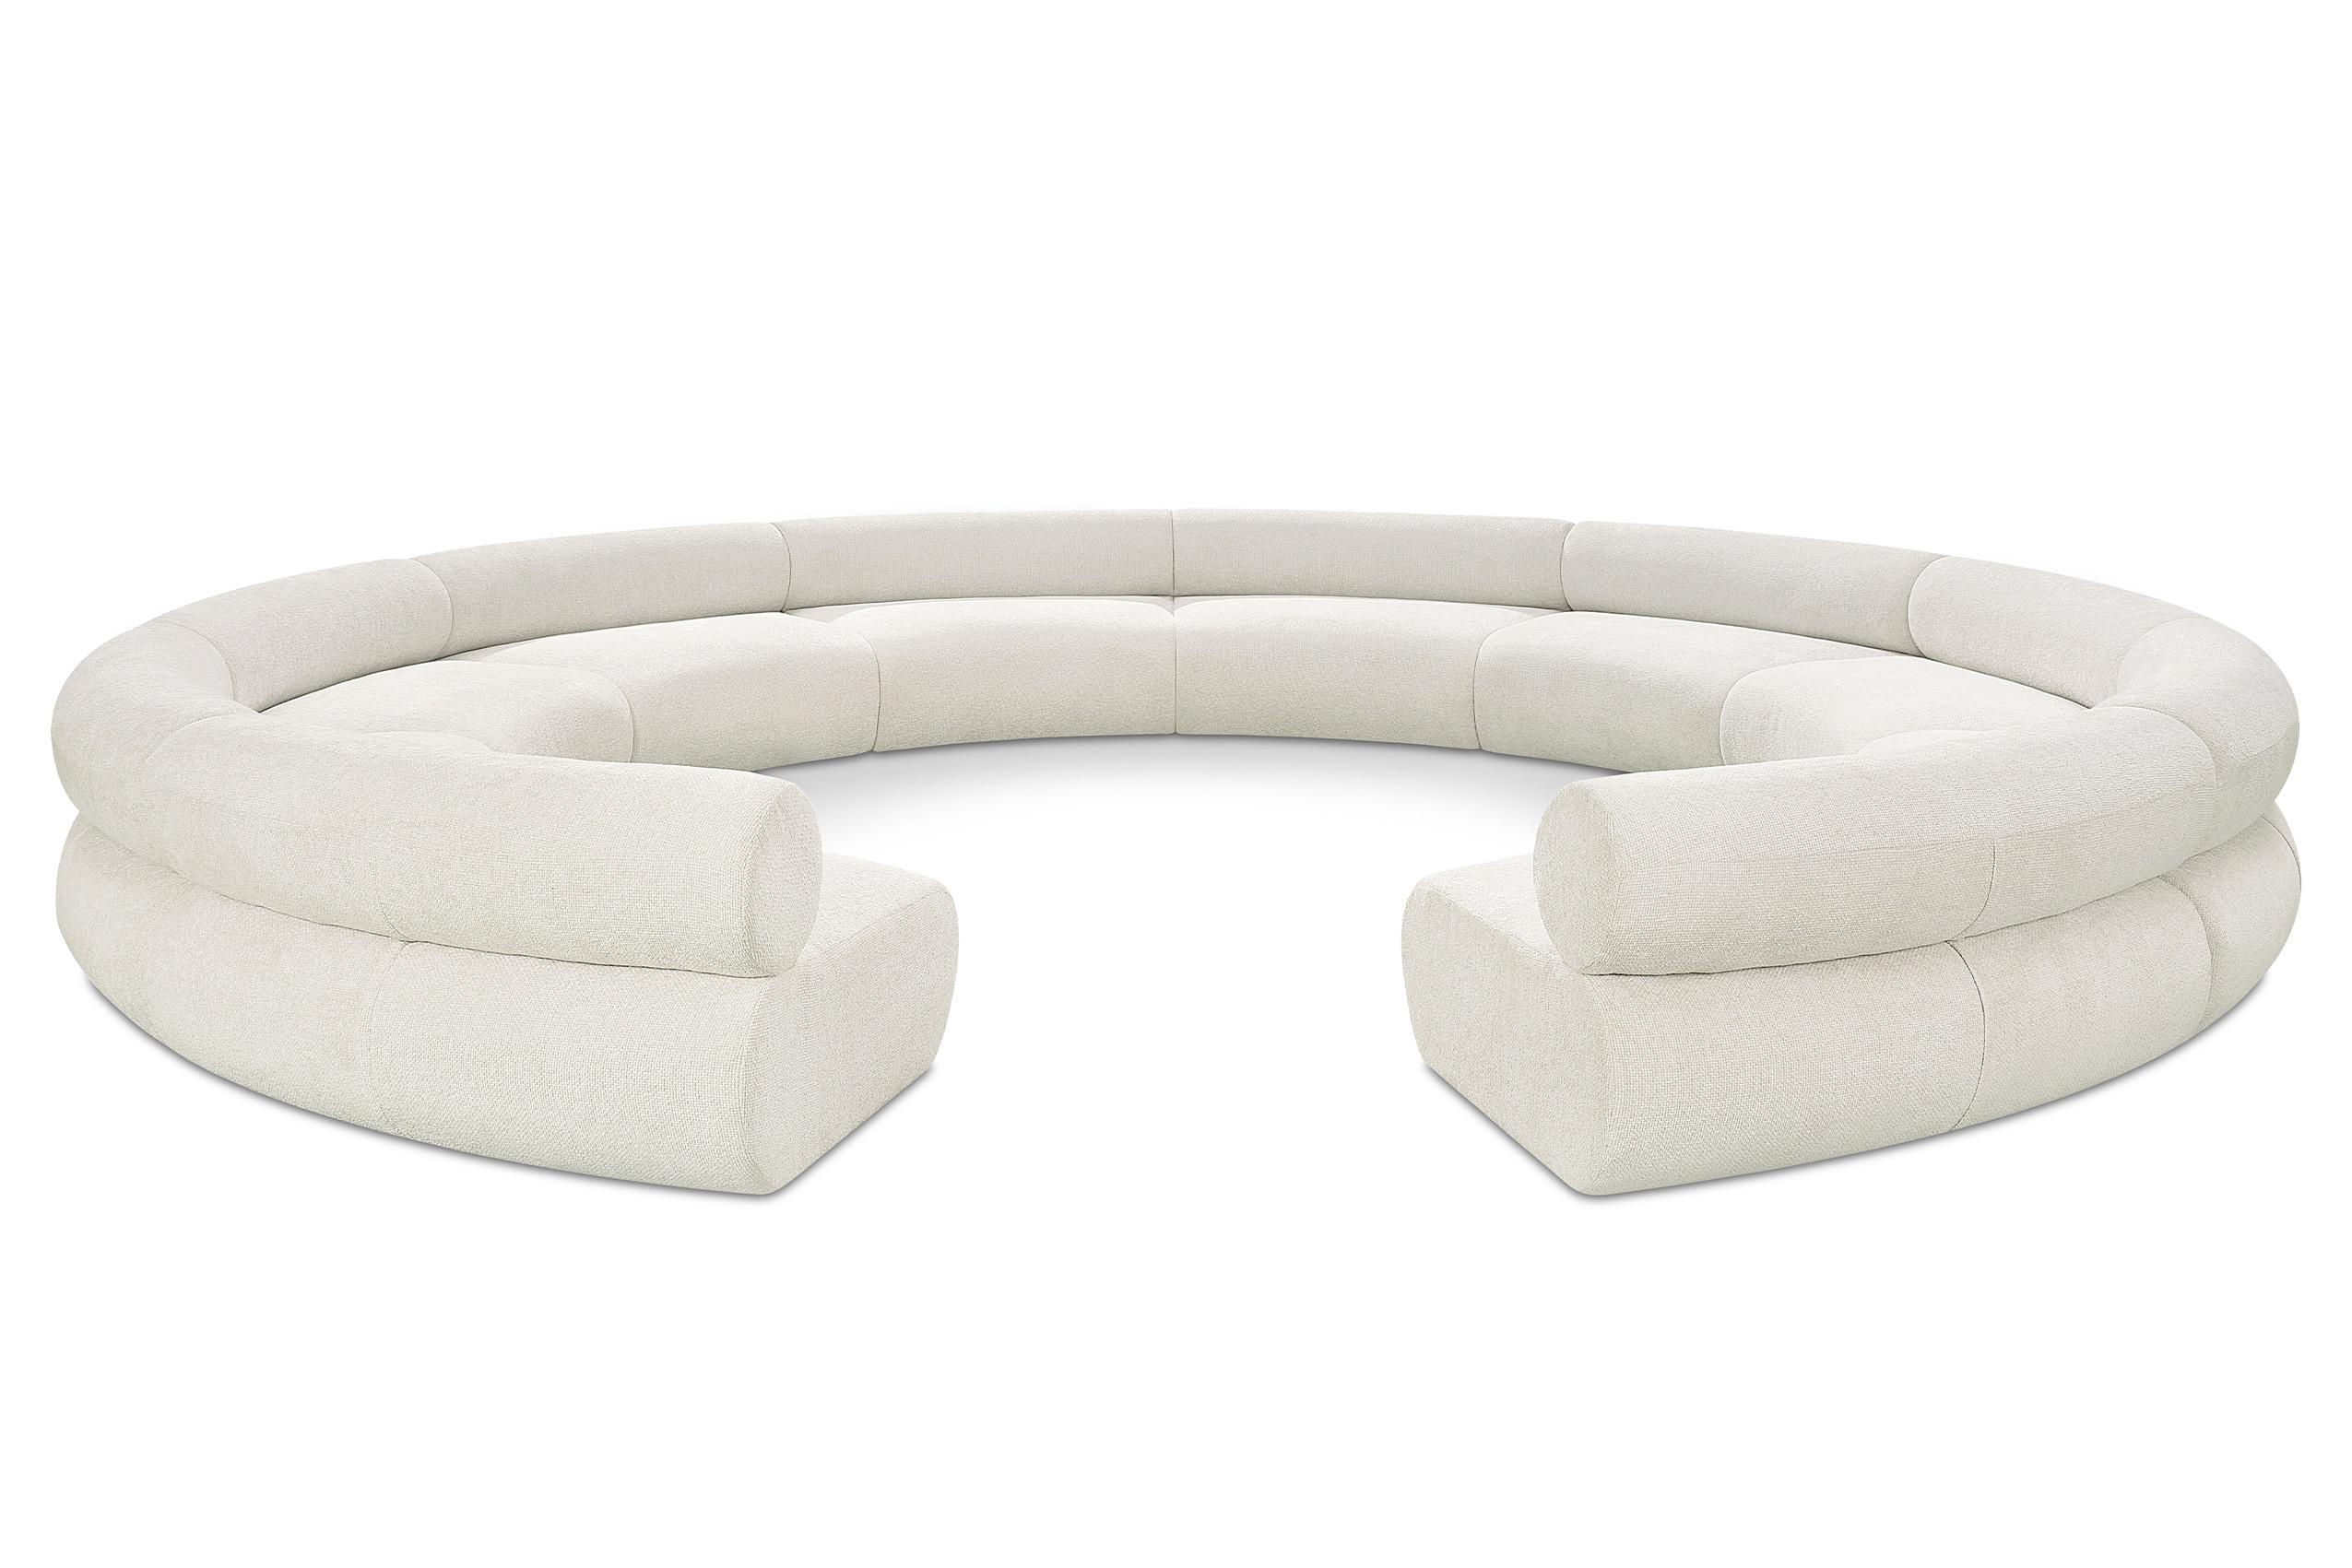 Contemporary, Modern Modular Sectional Sofa Bale 114Cream-S10A 114Cream-S10A in Cream Chenille